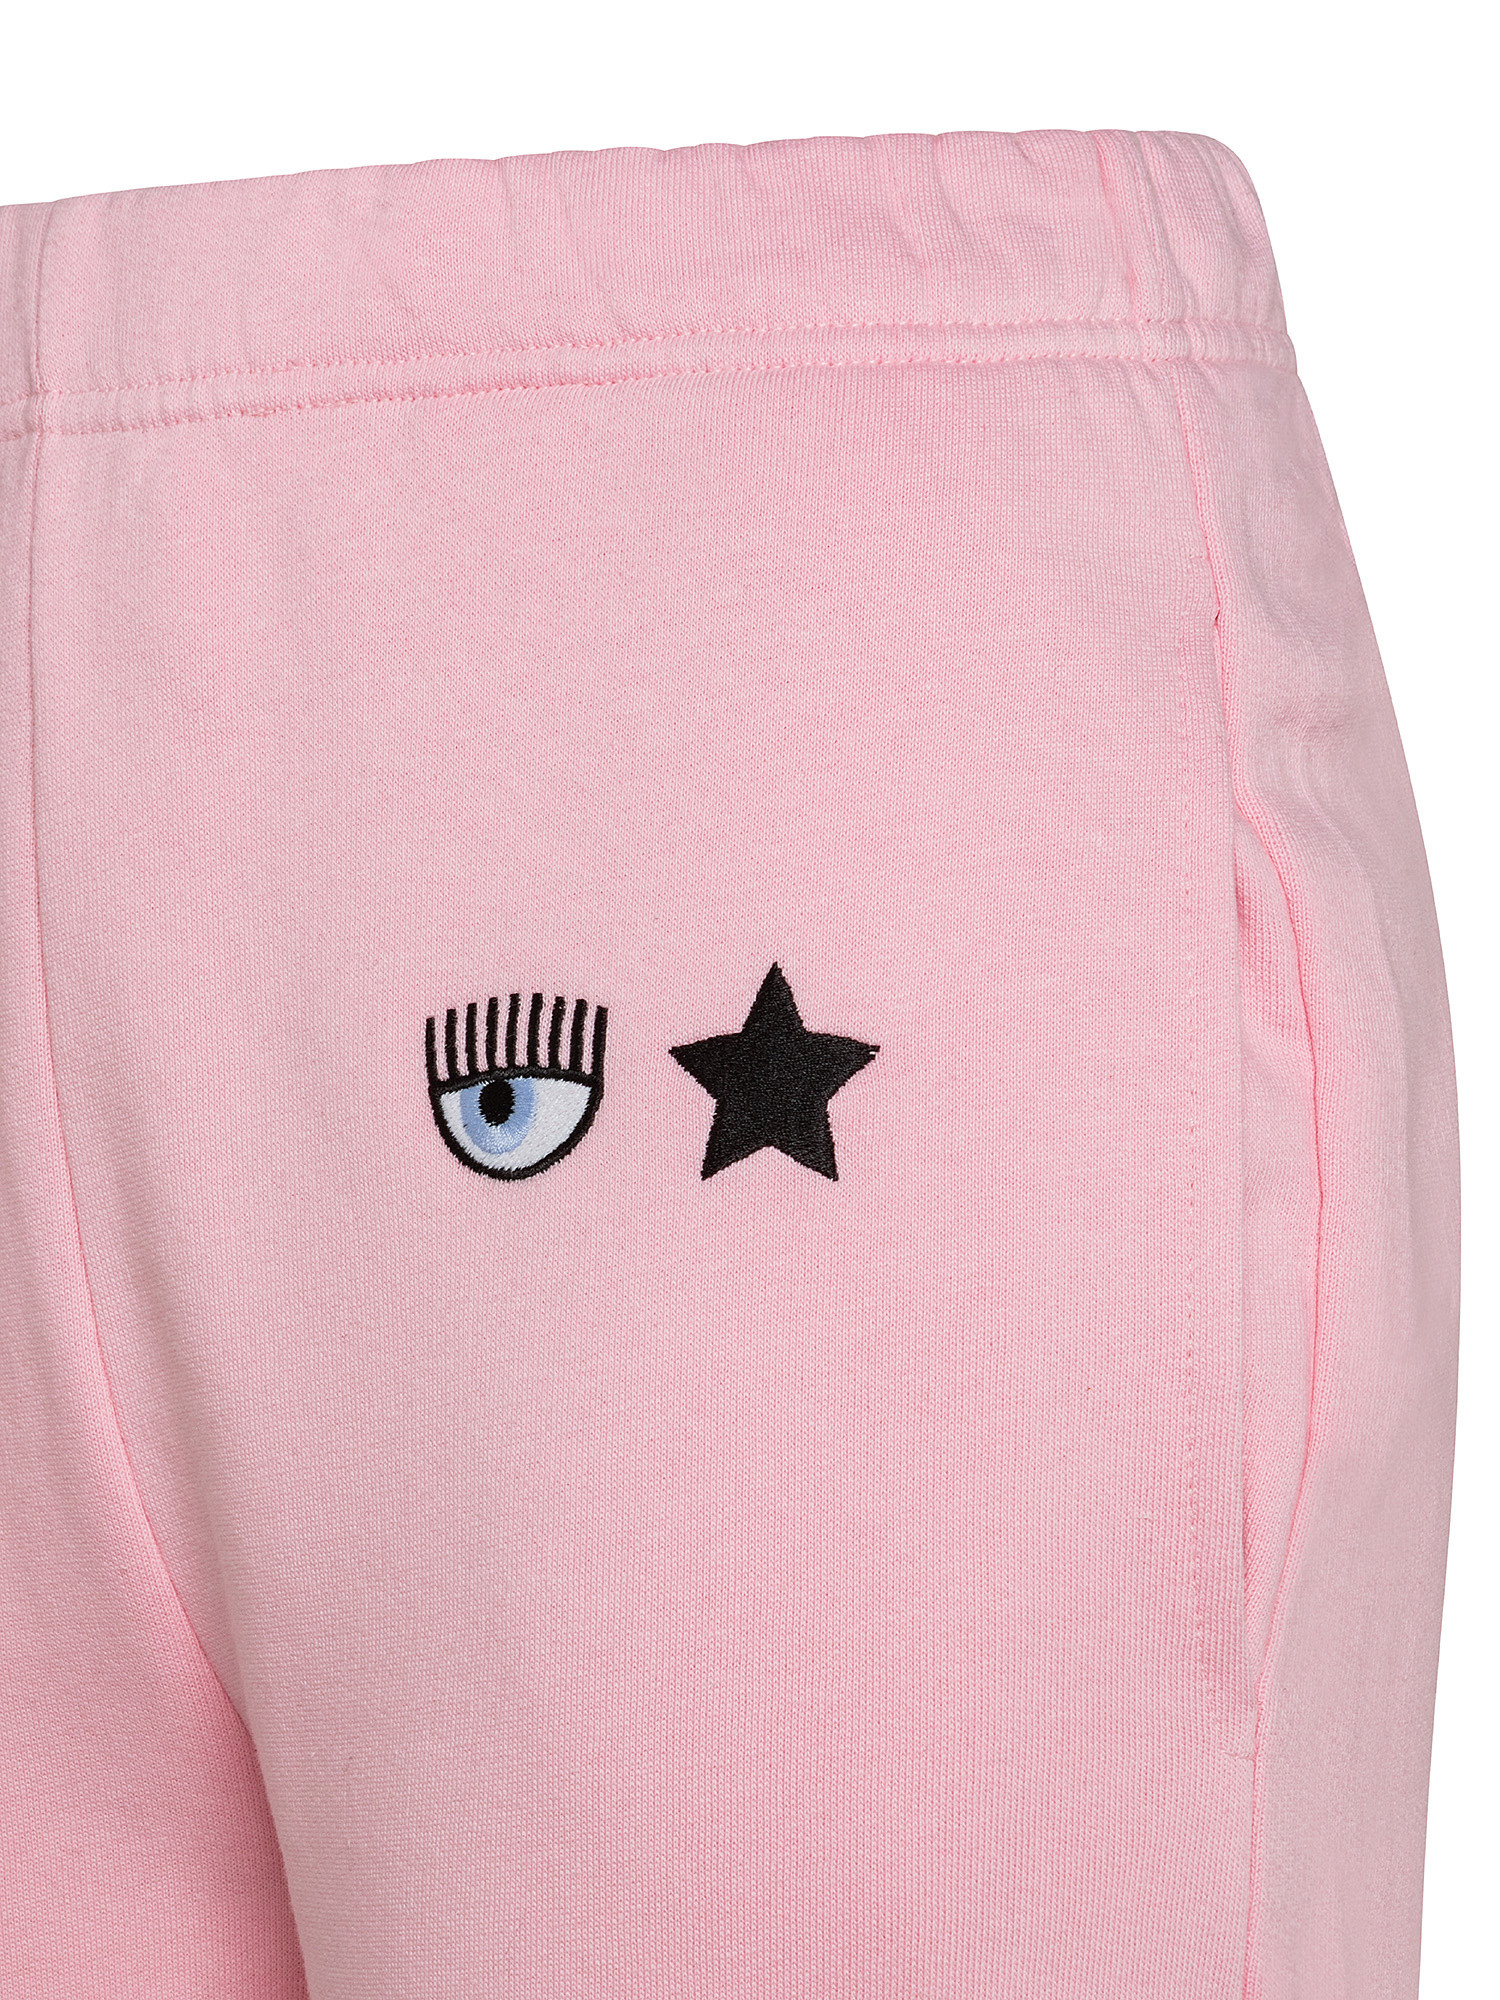 Pantaloni Eye Star, Rosa, large image number 2